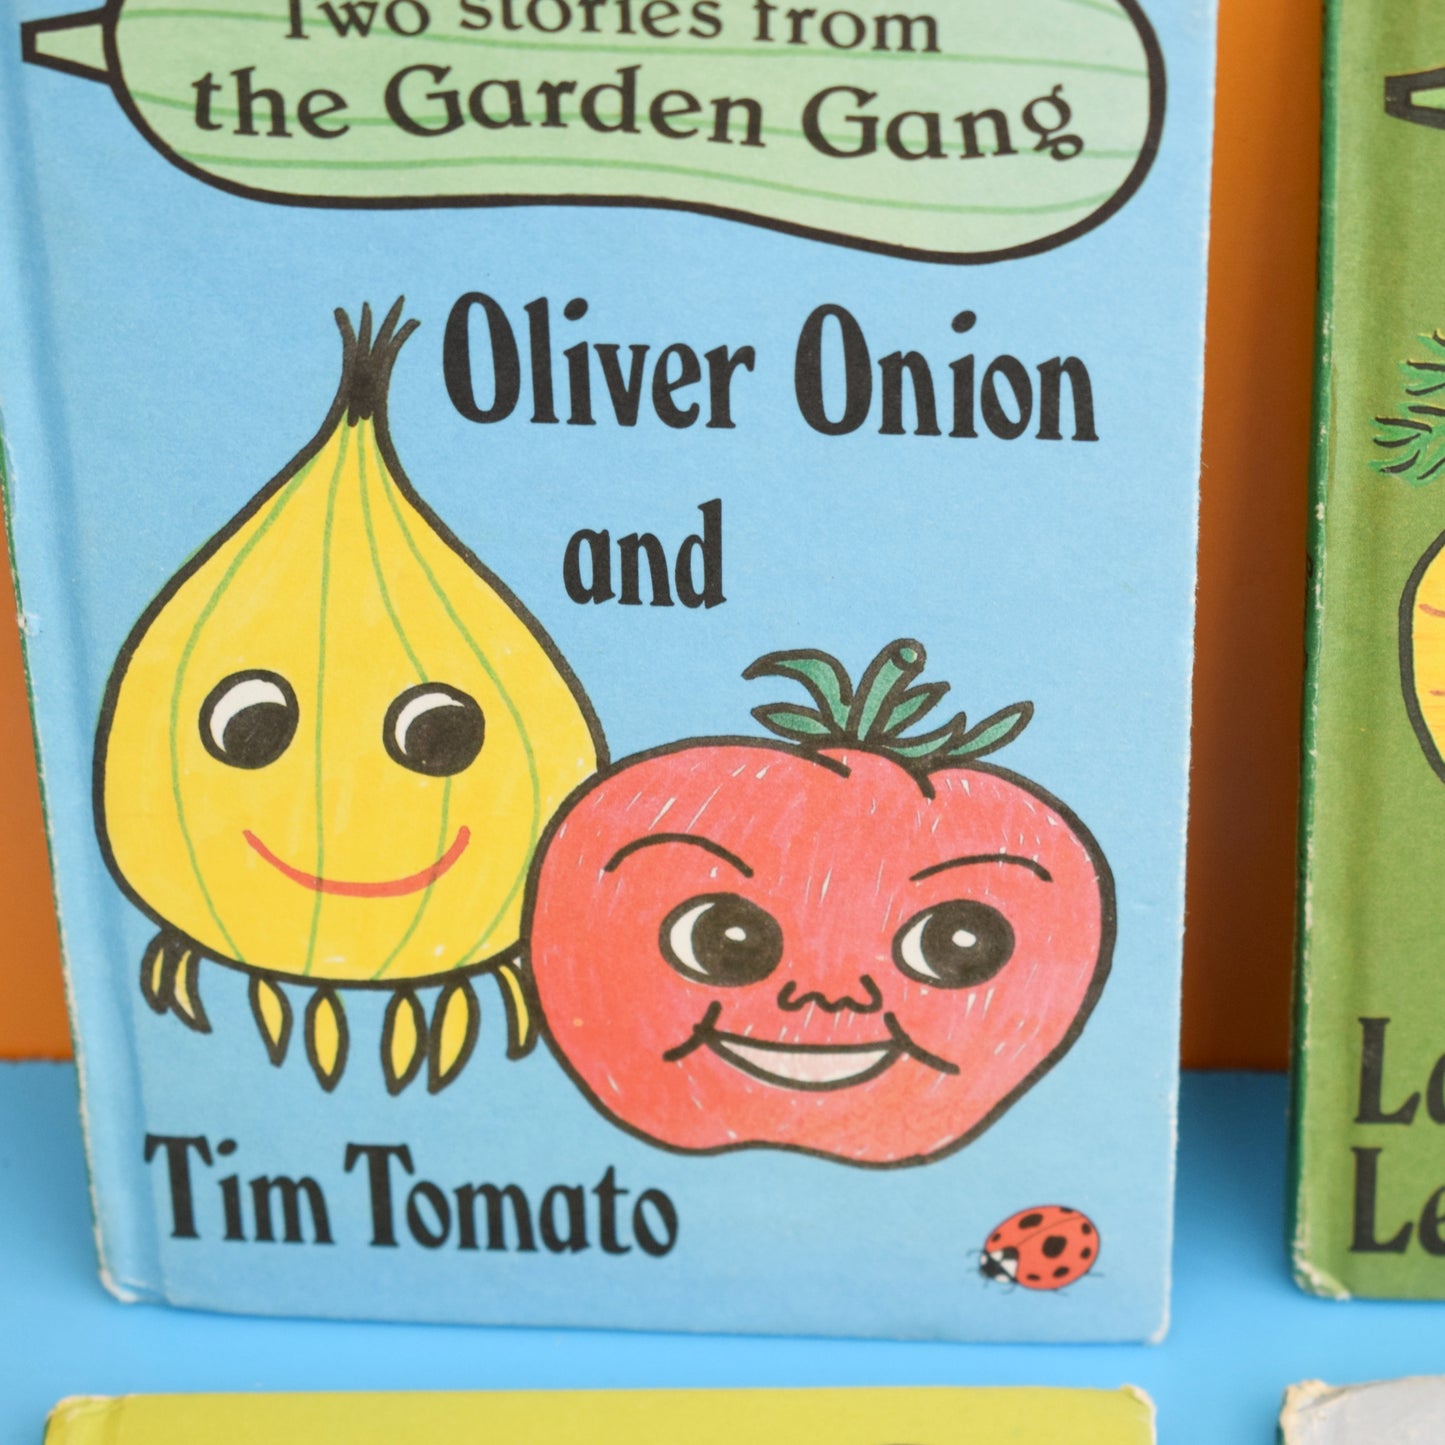 Vintage 1980s Ladybird Books - Garden Gang 2